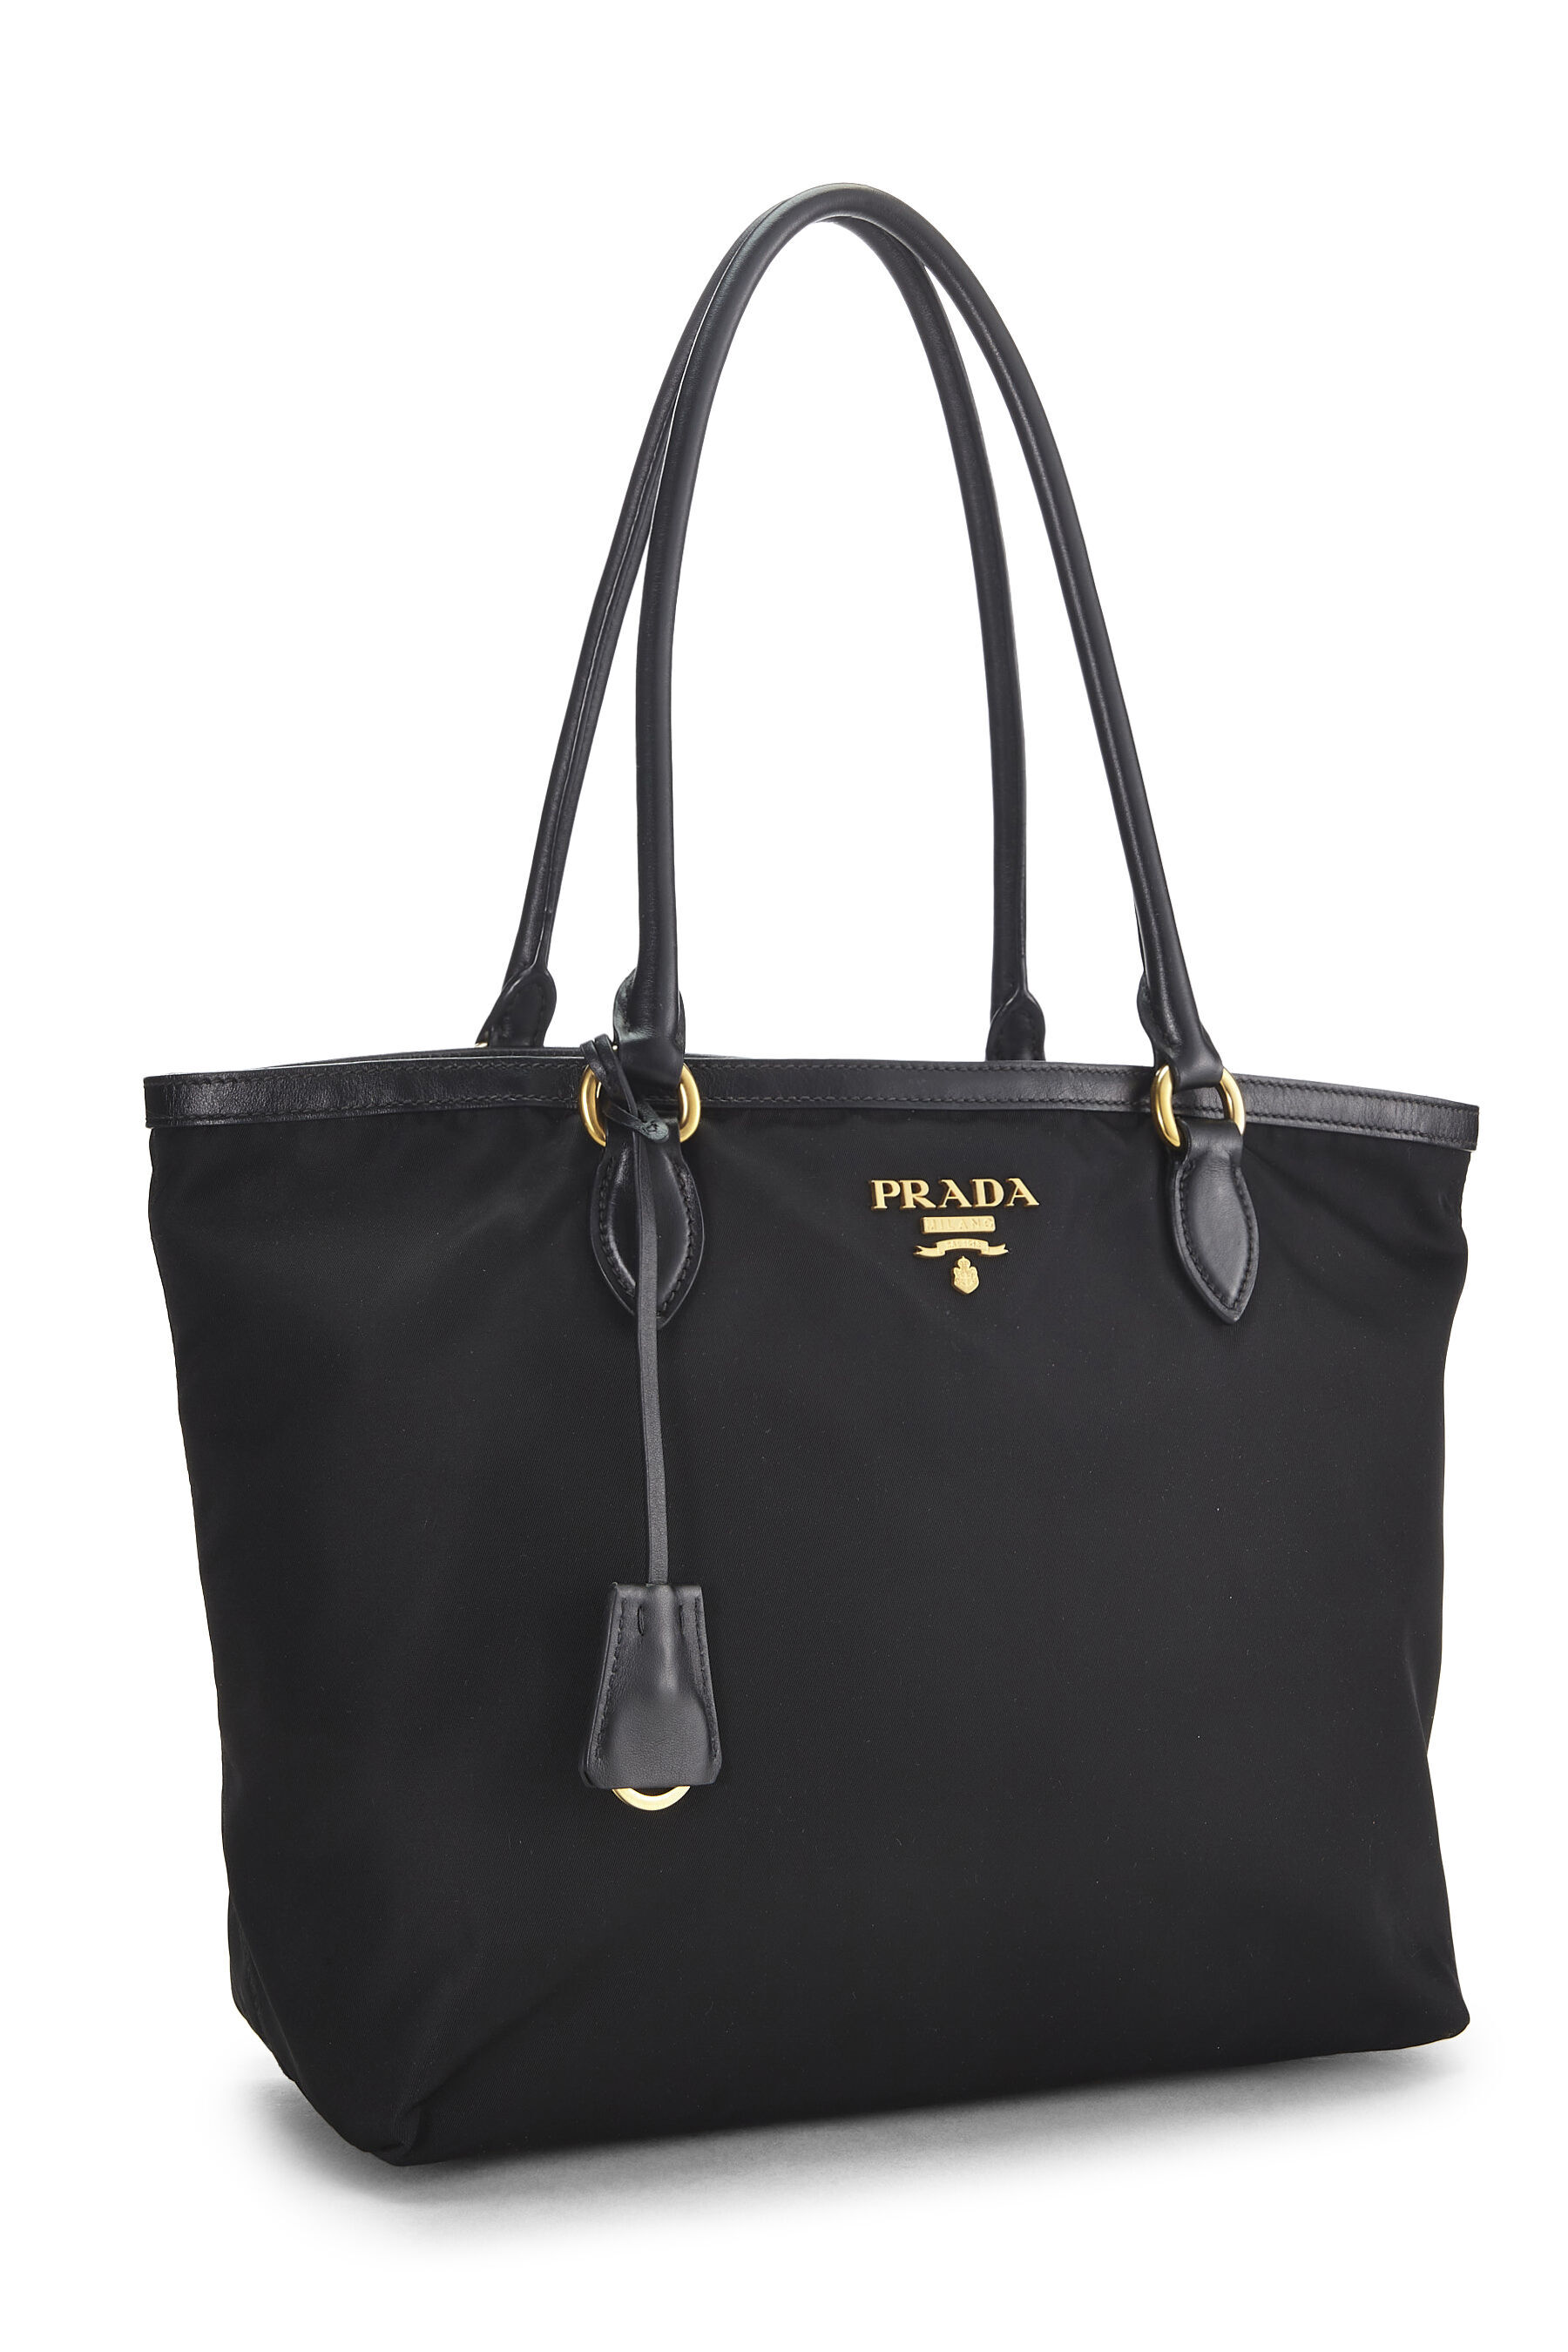 PRADA Leather Handbag in Utako - Bags, Daniel Nwachukwu | Jiji.ng